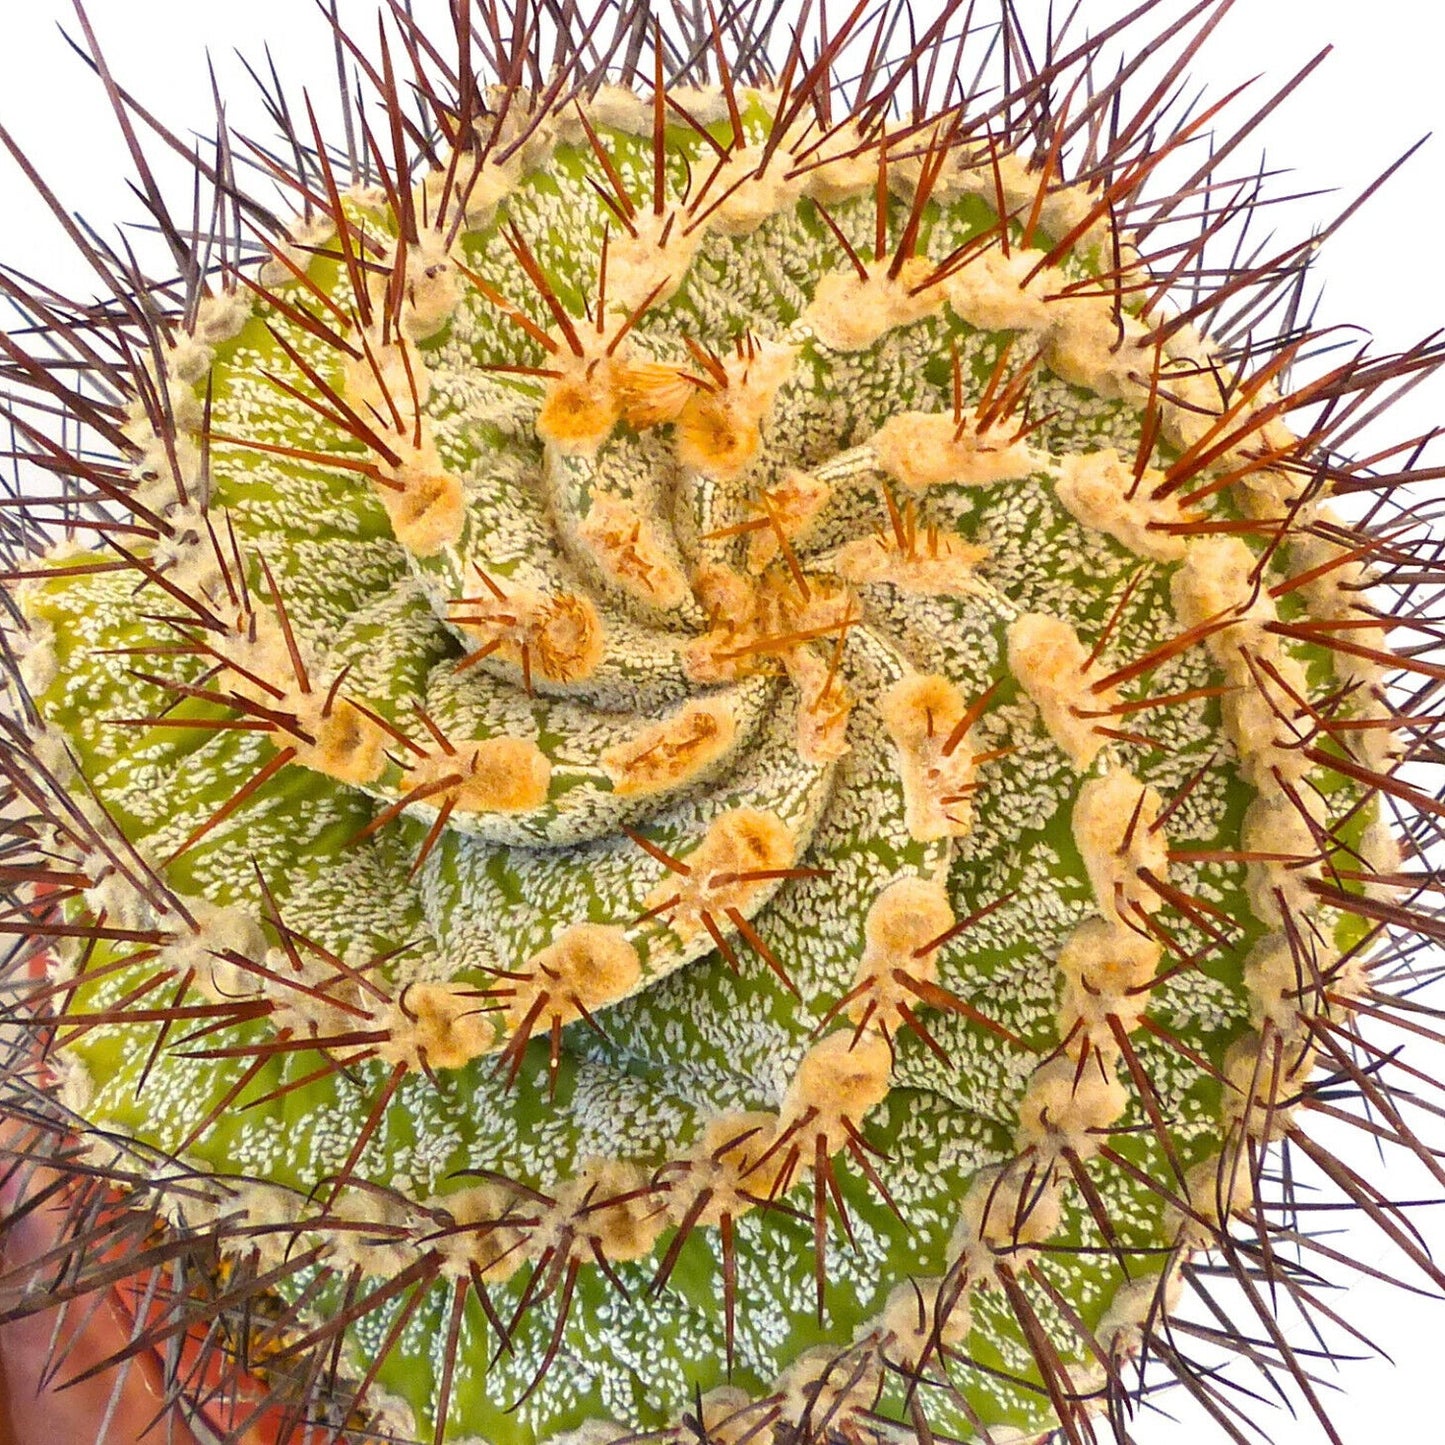 Astrophytum ornatum form spiralis SEEDS